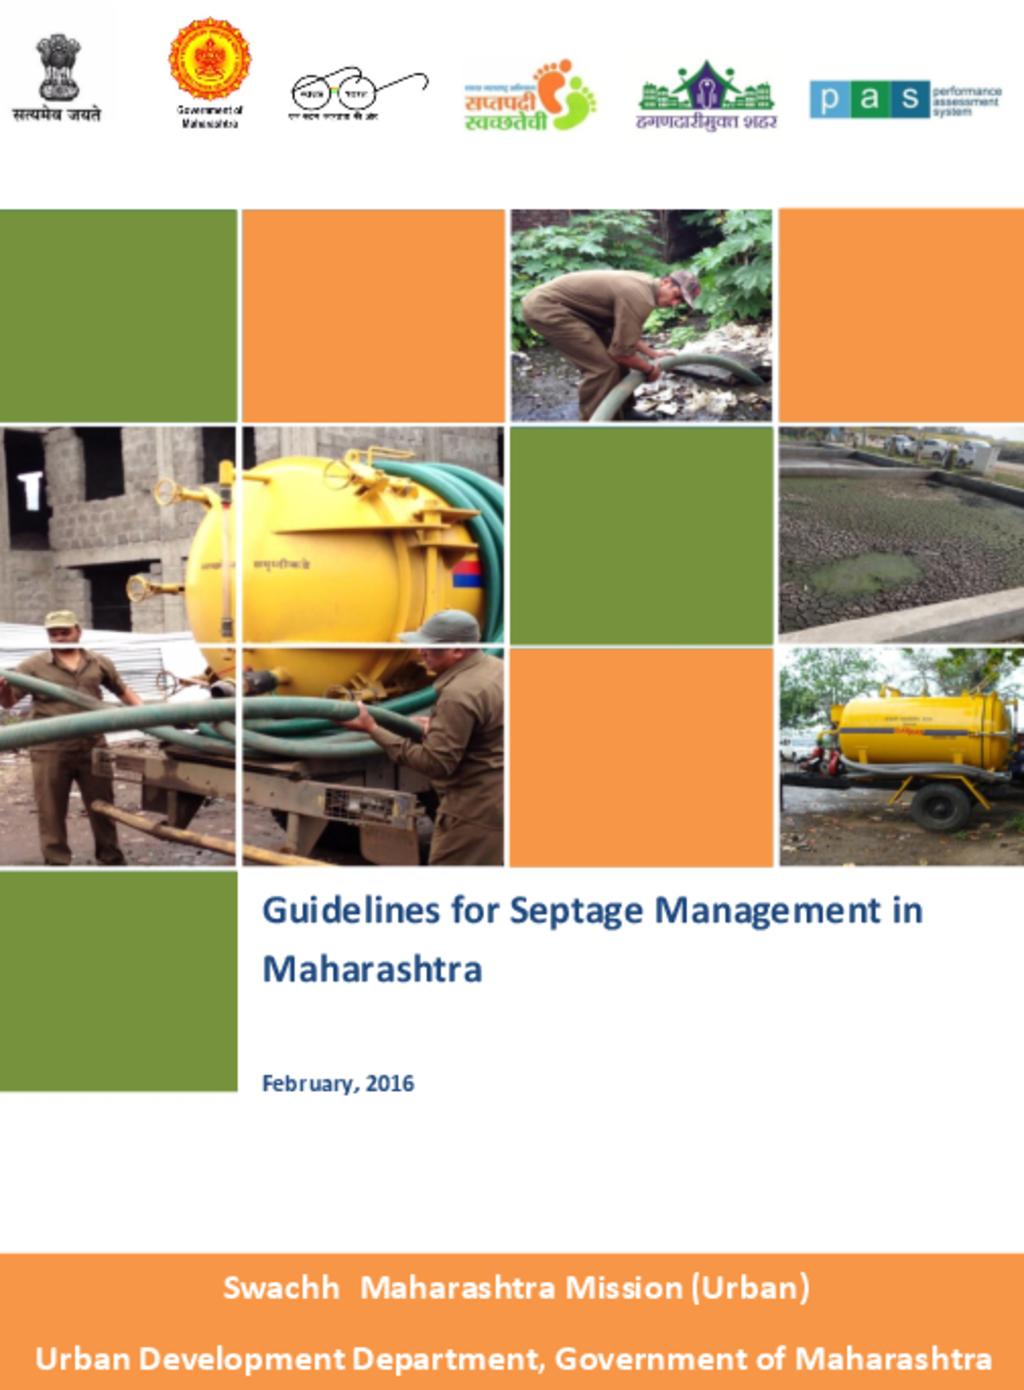 Septage Management Guidelines for Maharashtra